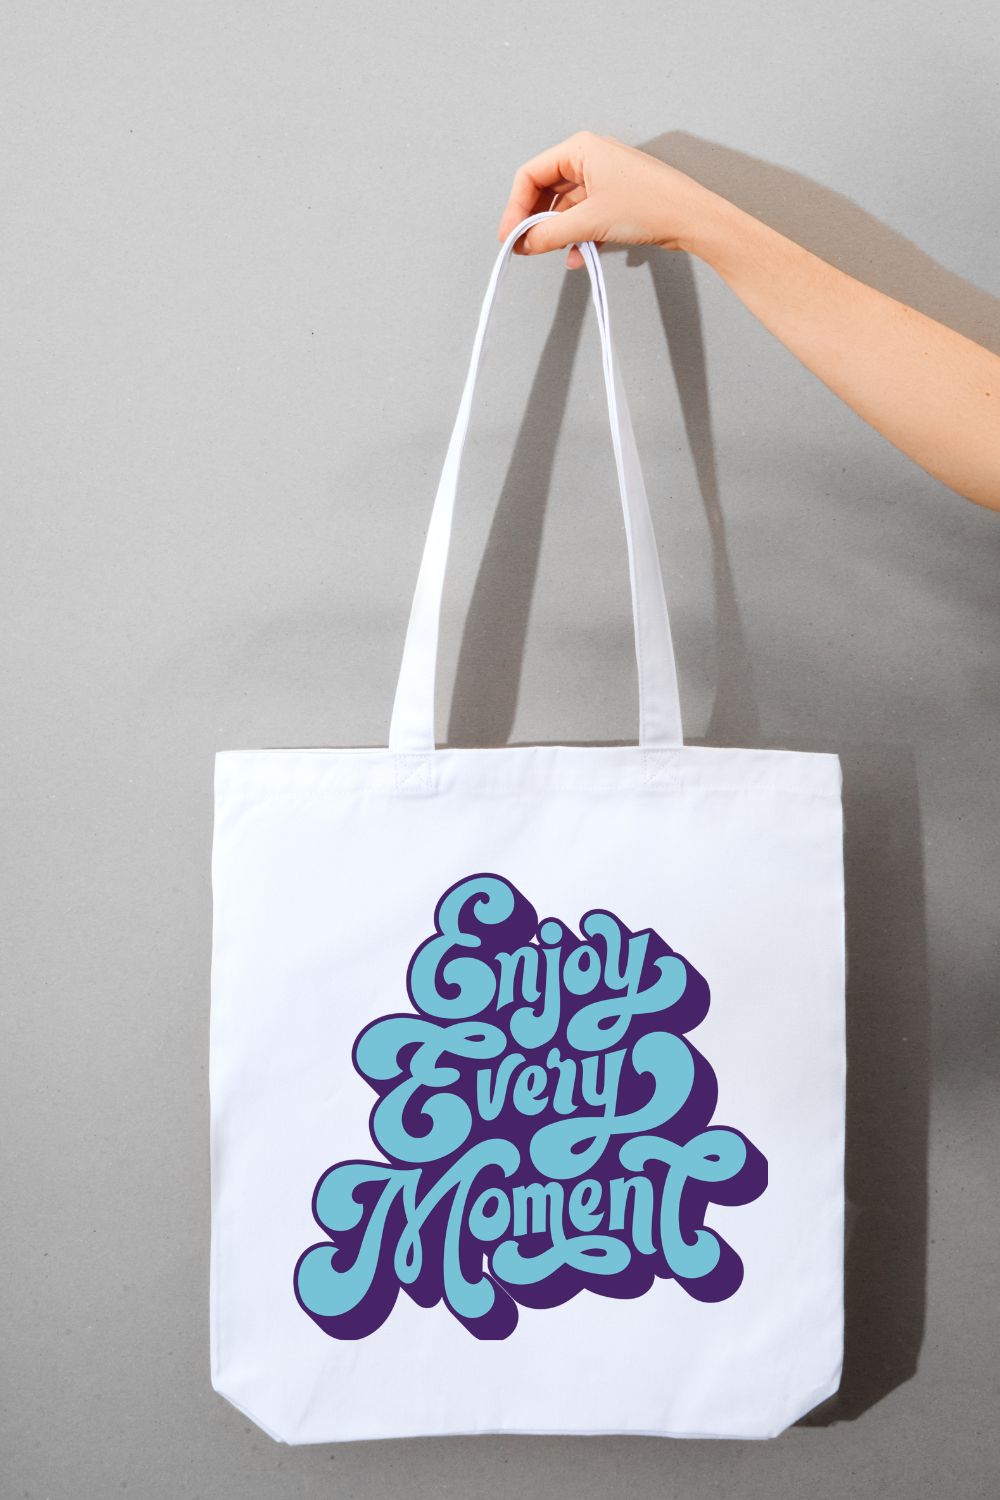 motivational t shirt design "Enjoy Every moment" pinterest preview image.